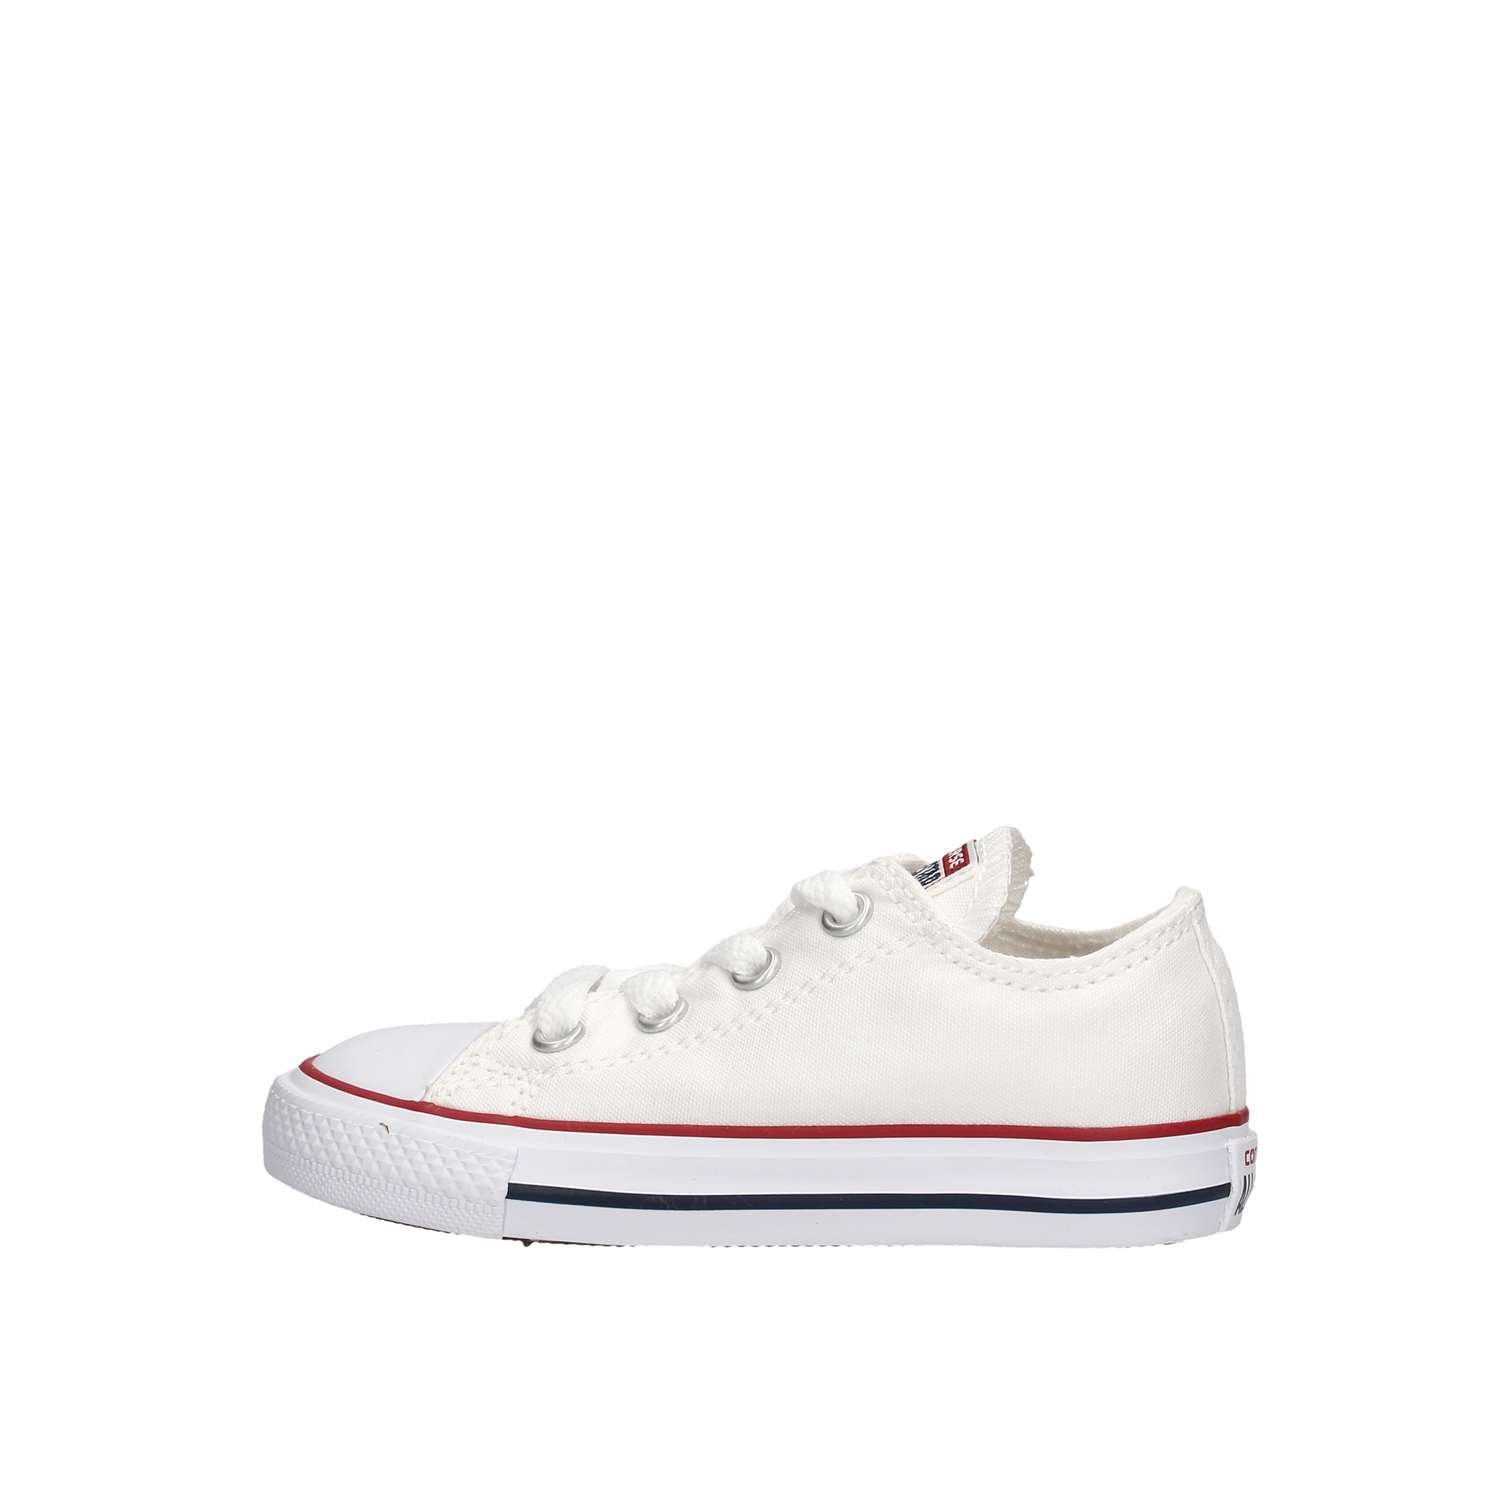 Converse C/T A/S Ox Kinder Chucks Sneaker 7J256C Weiß, Schuhgröße:24 EU